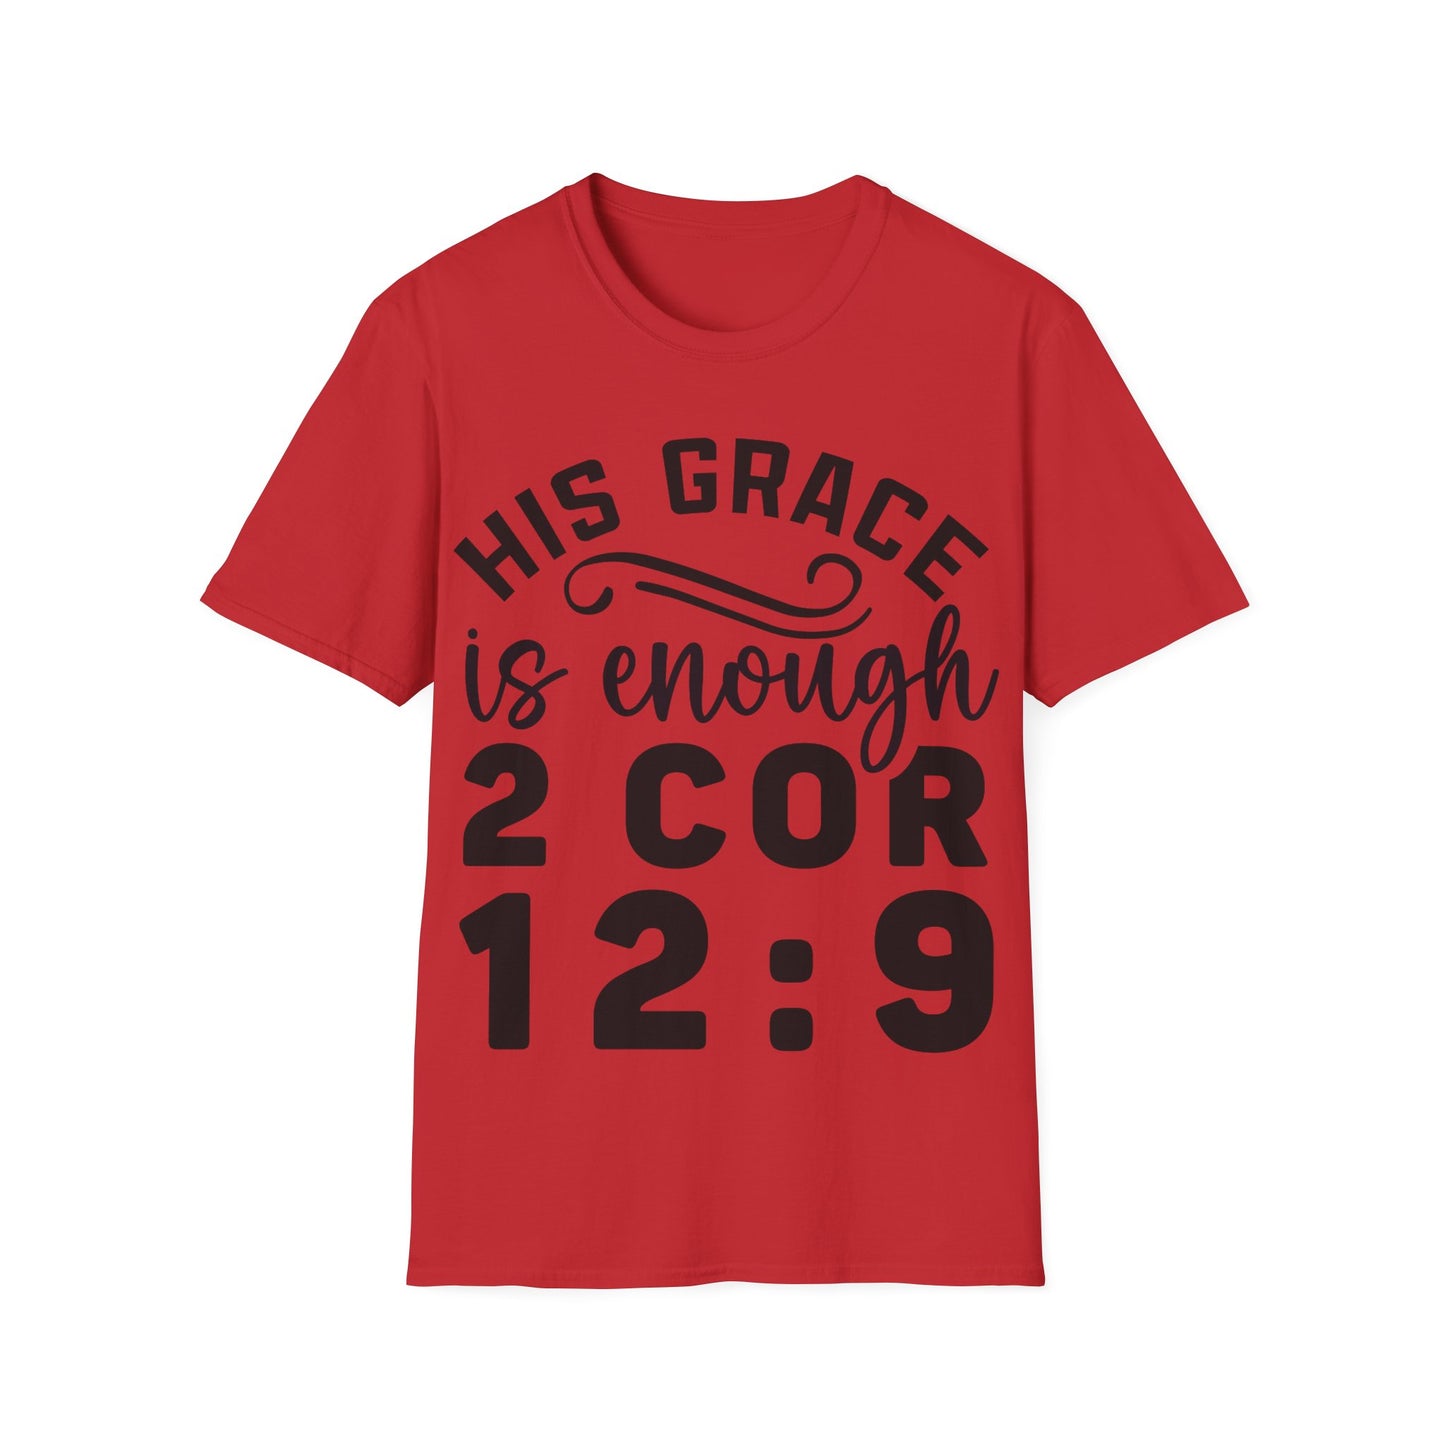 His Grace Is Enough 2 Cor 12:9 (2) Triple Viking T-Shirt